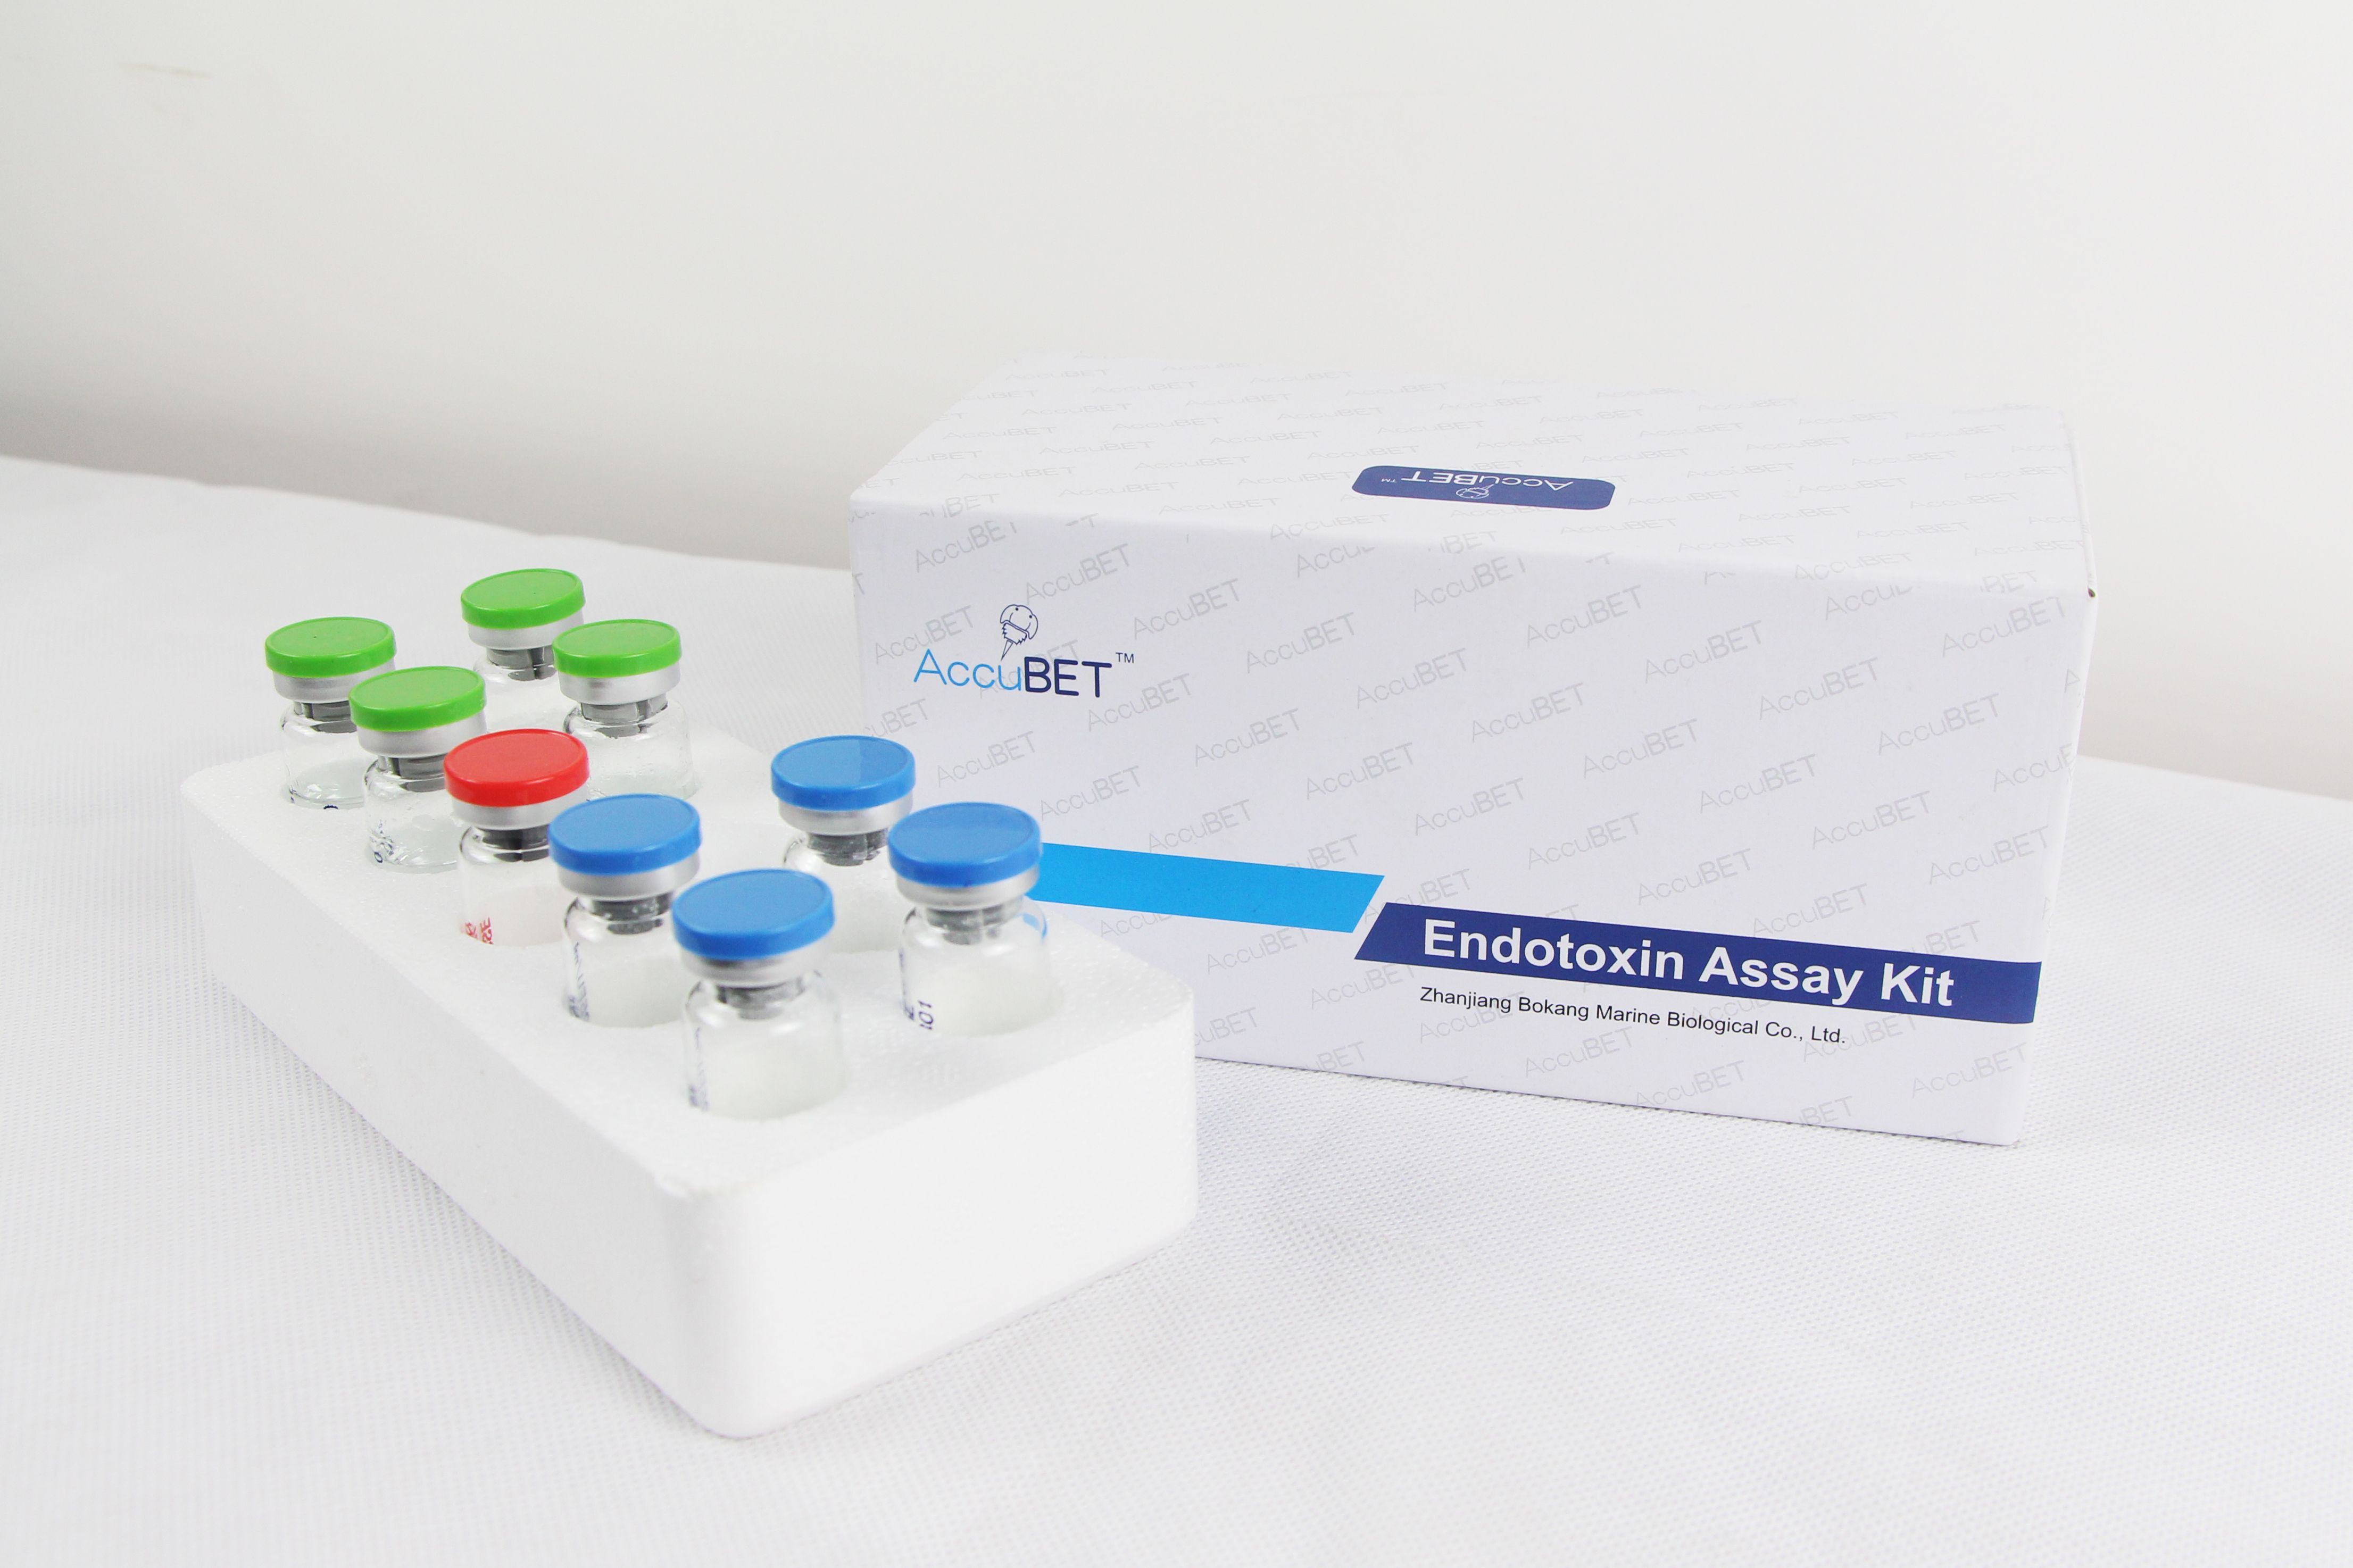 Endotoxin Assay Kit (Vial, with CSE and BET water, Kinetic-Turbidimetric method)